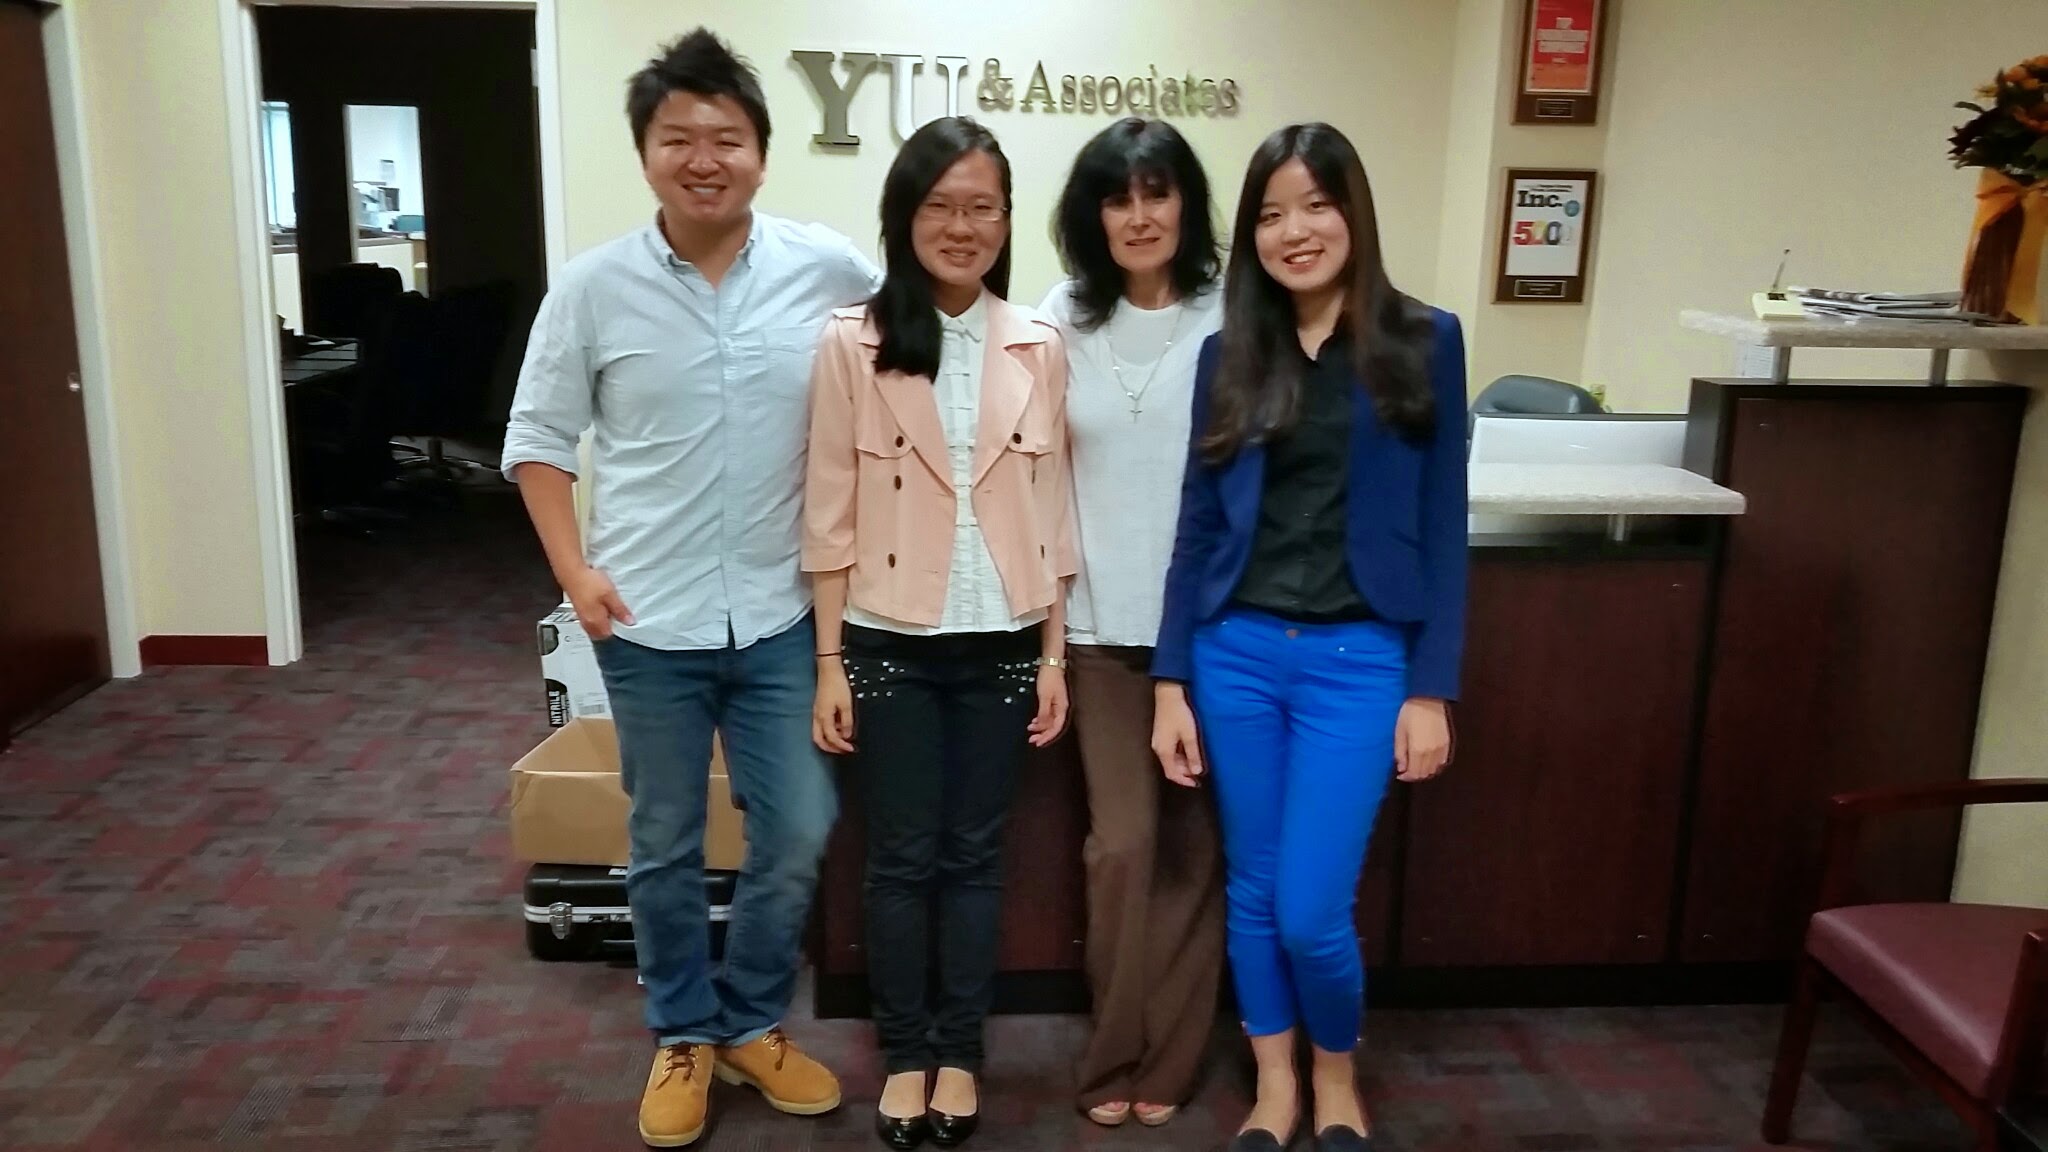 Yu & Associates, Inc.